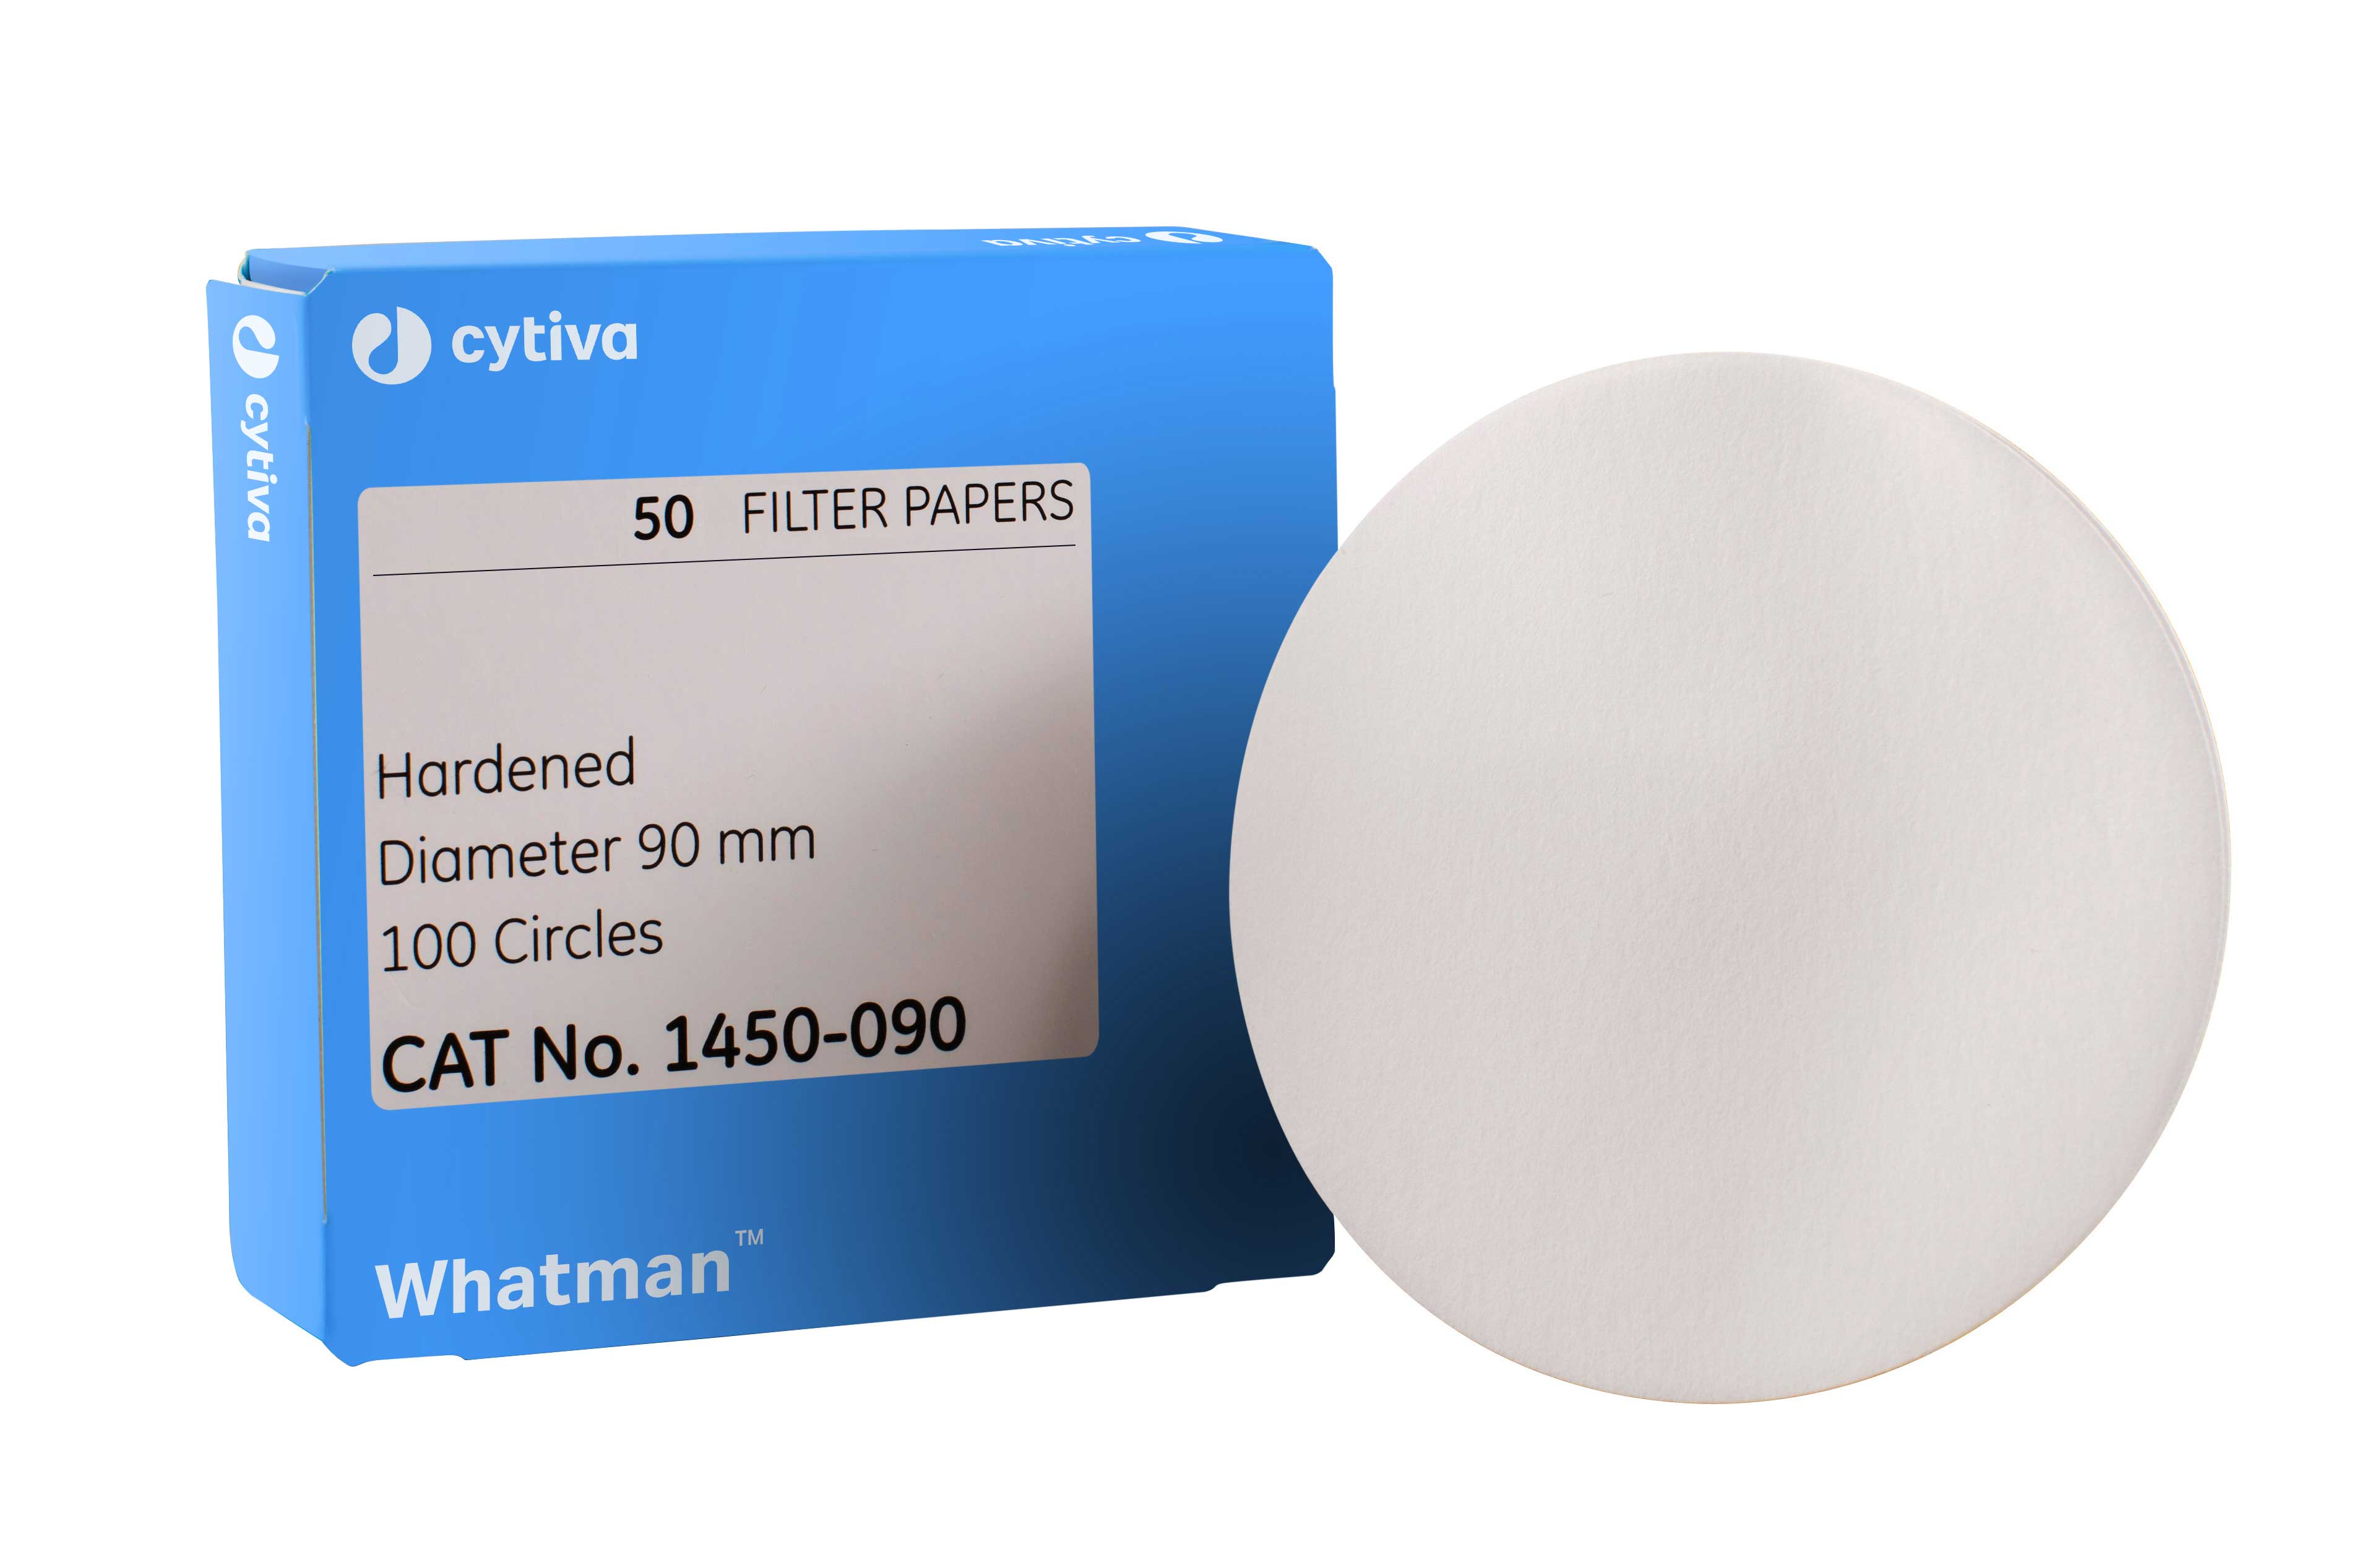 Filtro de papel de celulosa pura. Whatman™ (Cytiva). Disco Grado 50 Celulosa pura sin cenizas. Ø (mm): 185. Retención típica (µm): 2,7